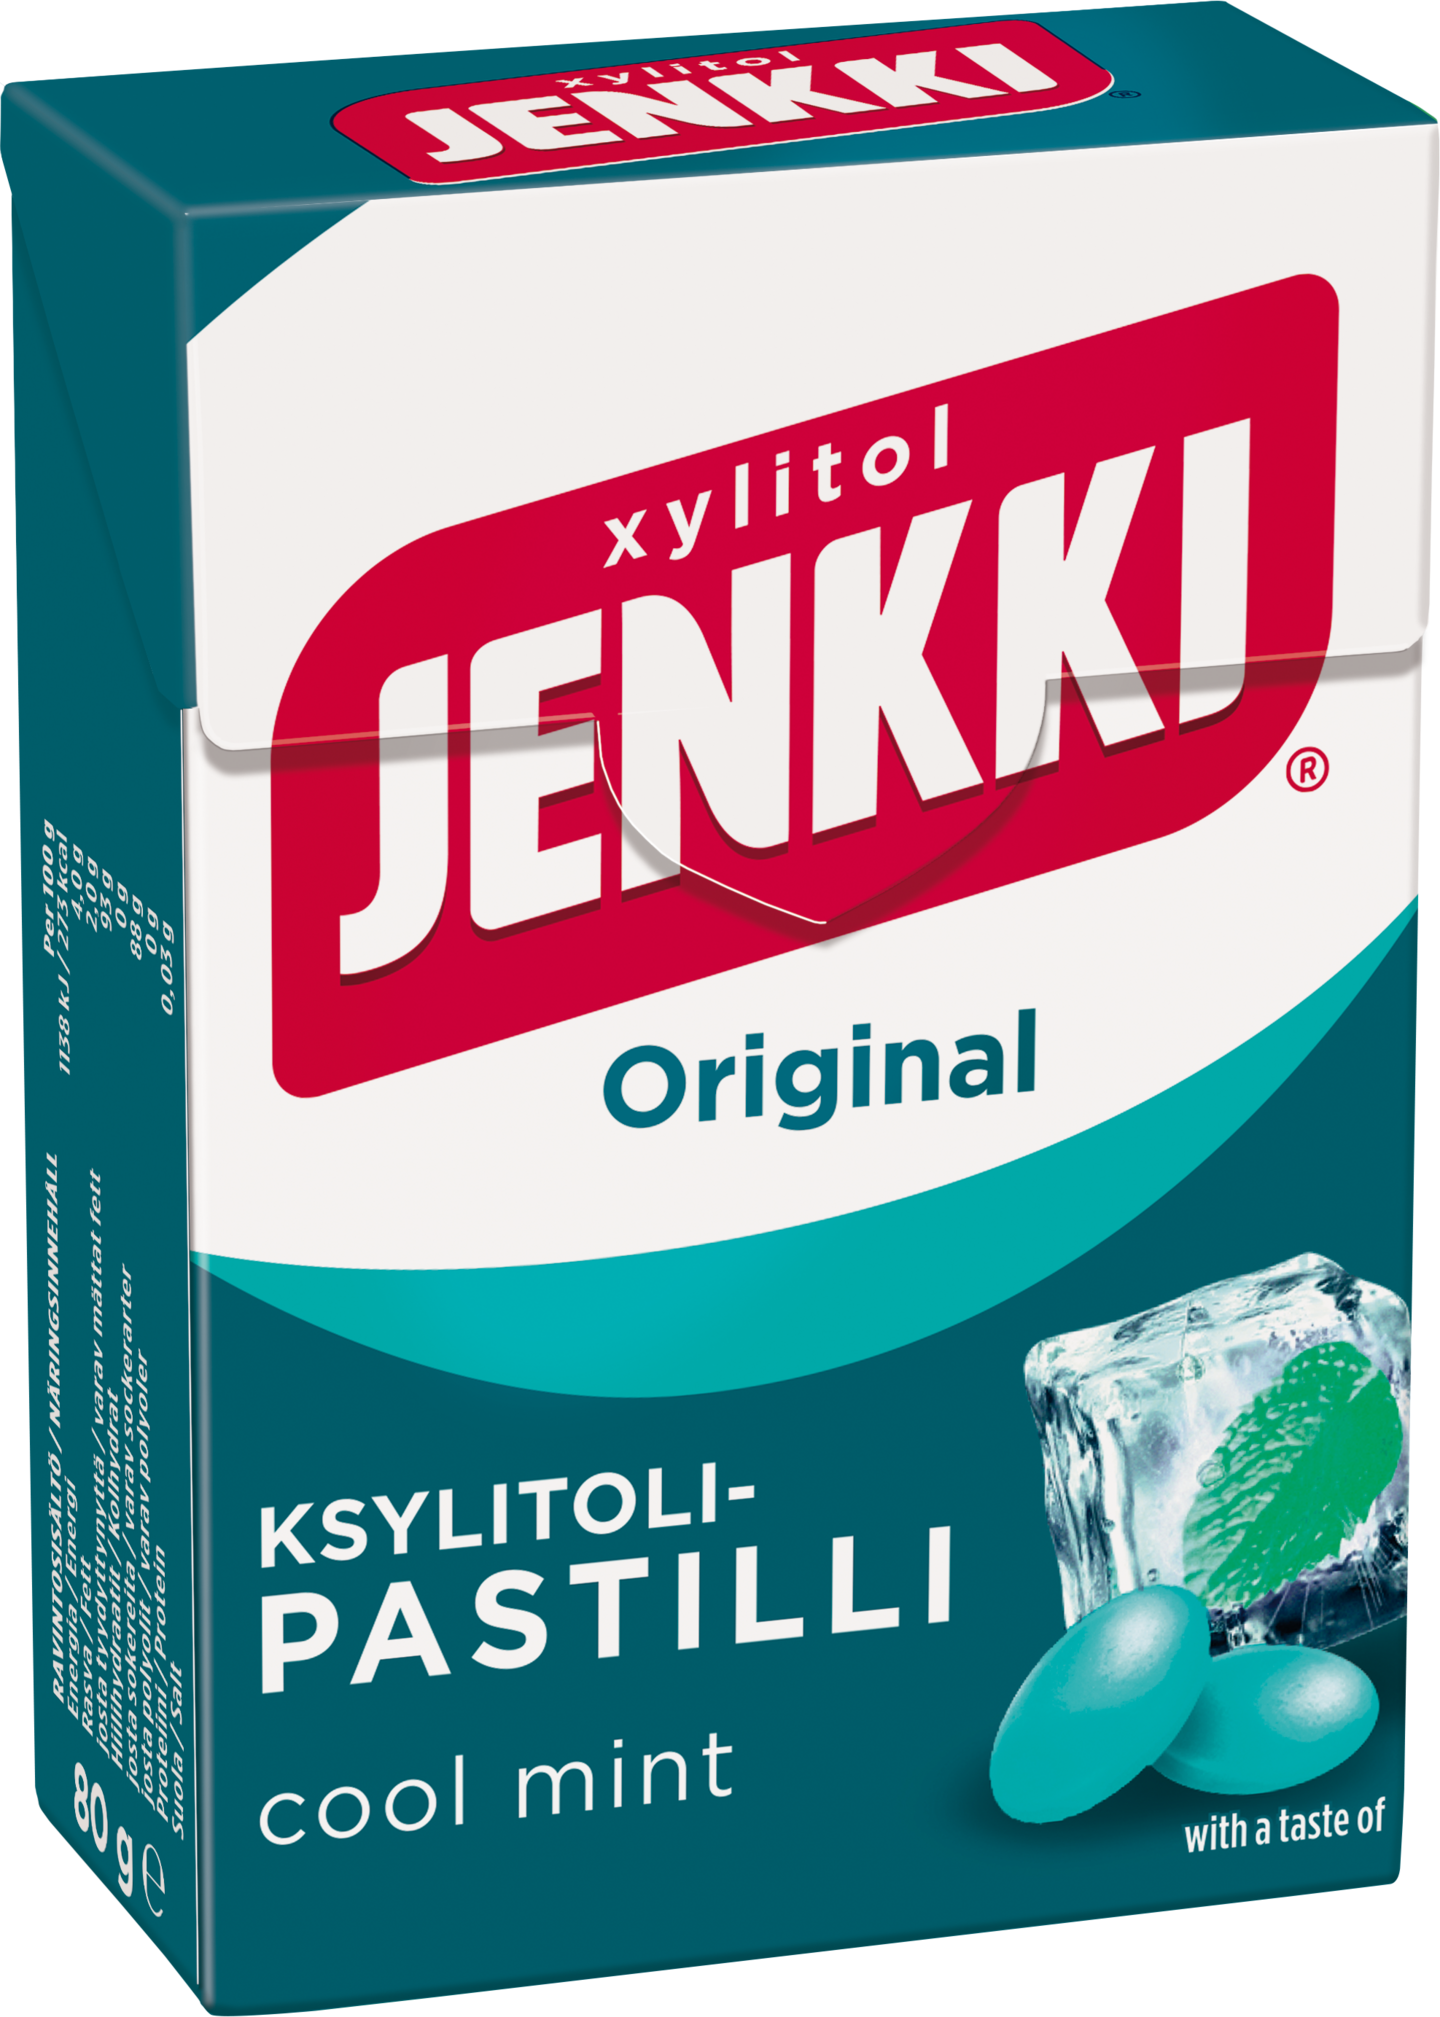 Jenkki Original Cool Mint ksylitolipastilli 80g